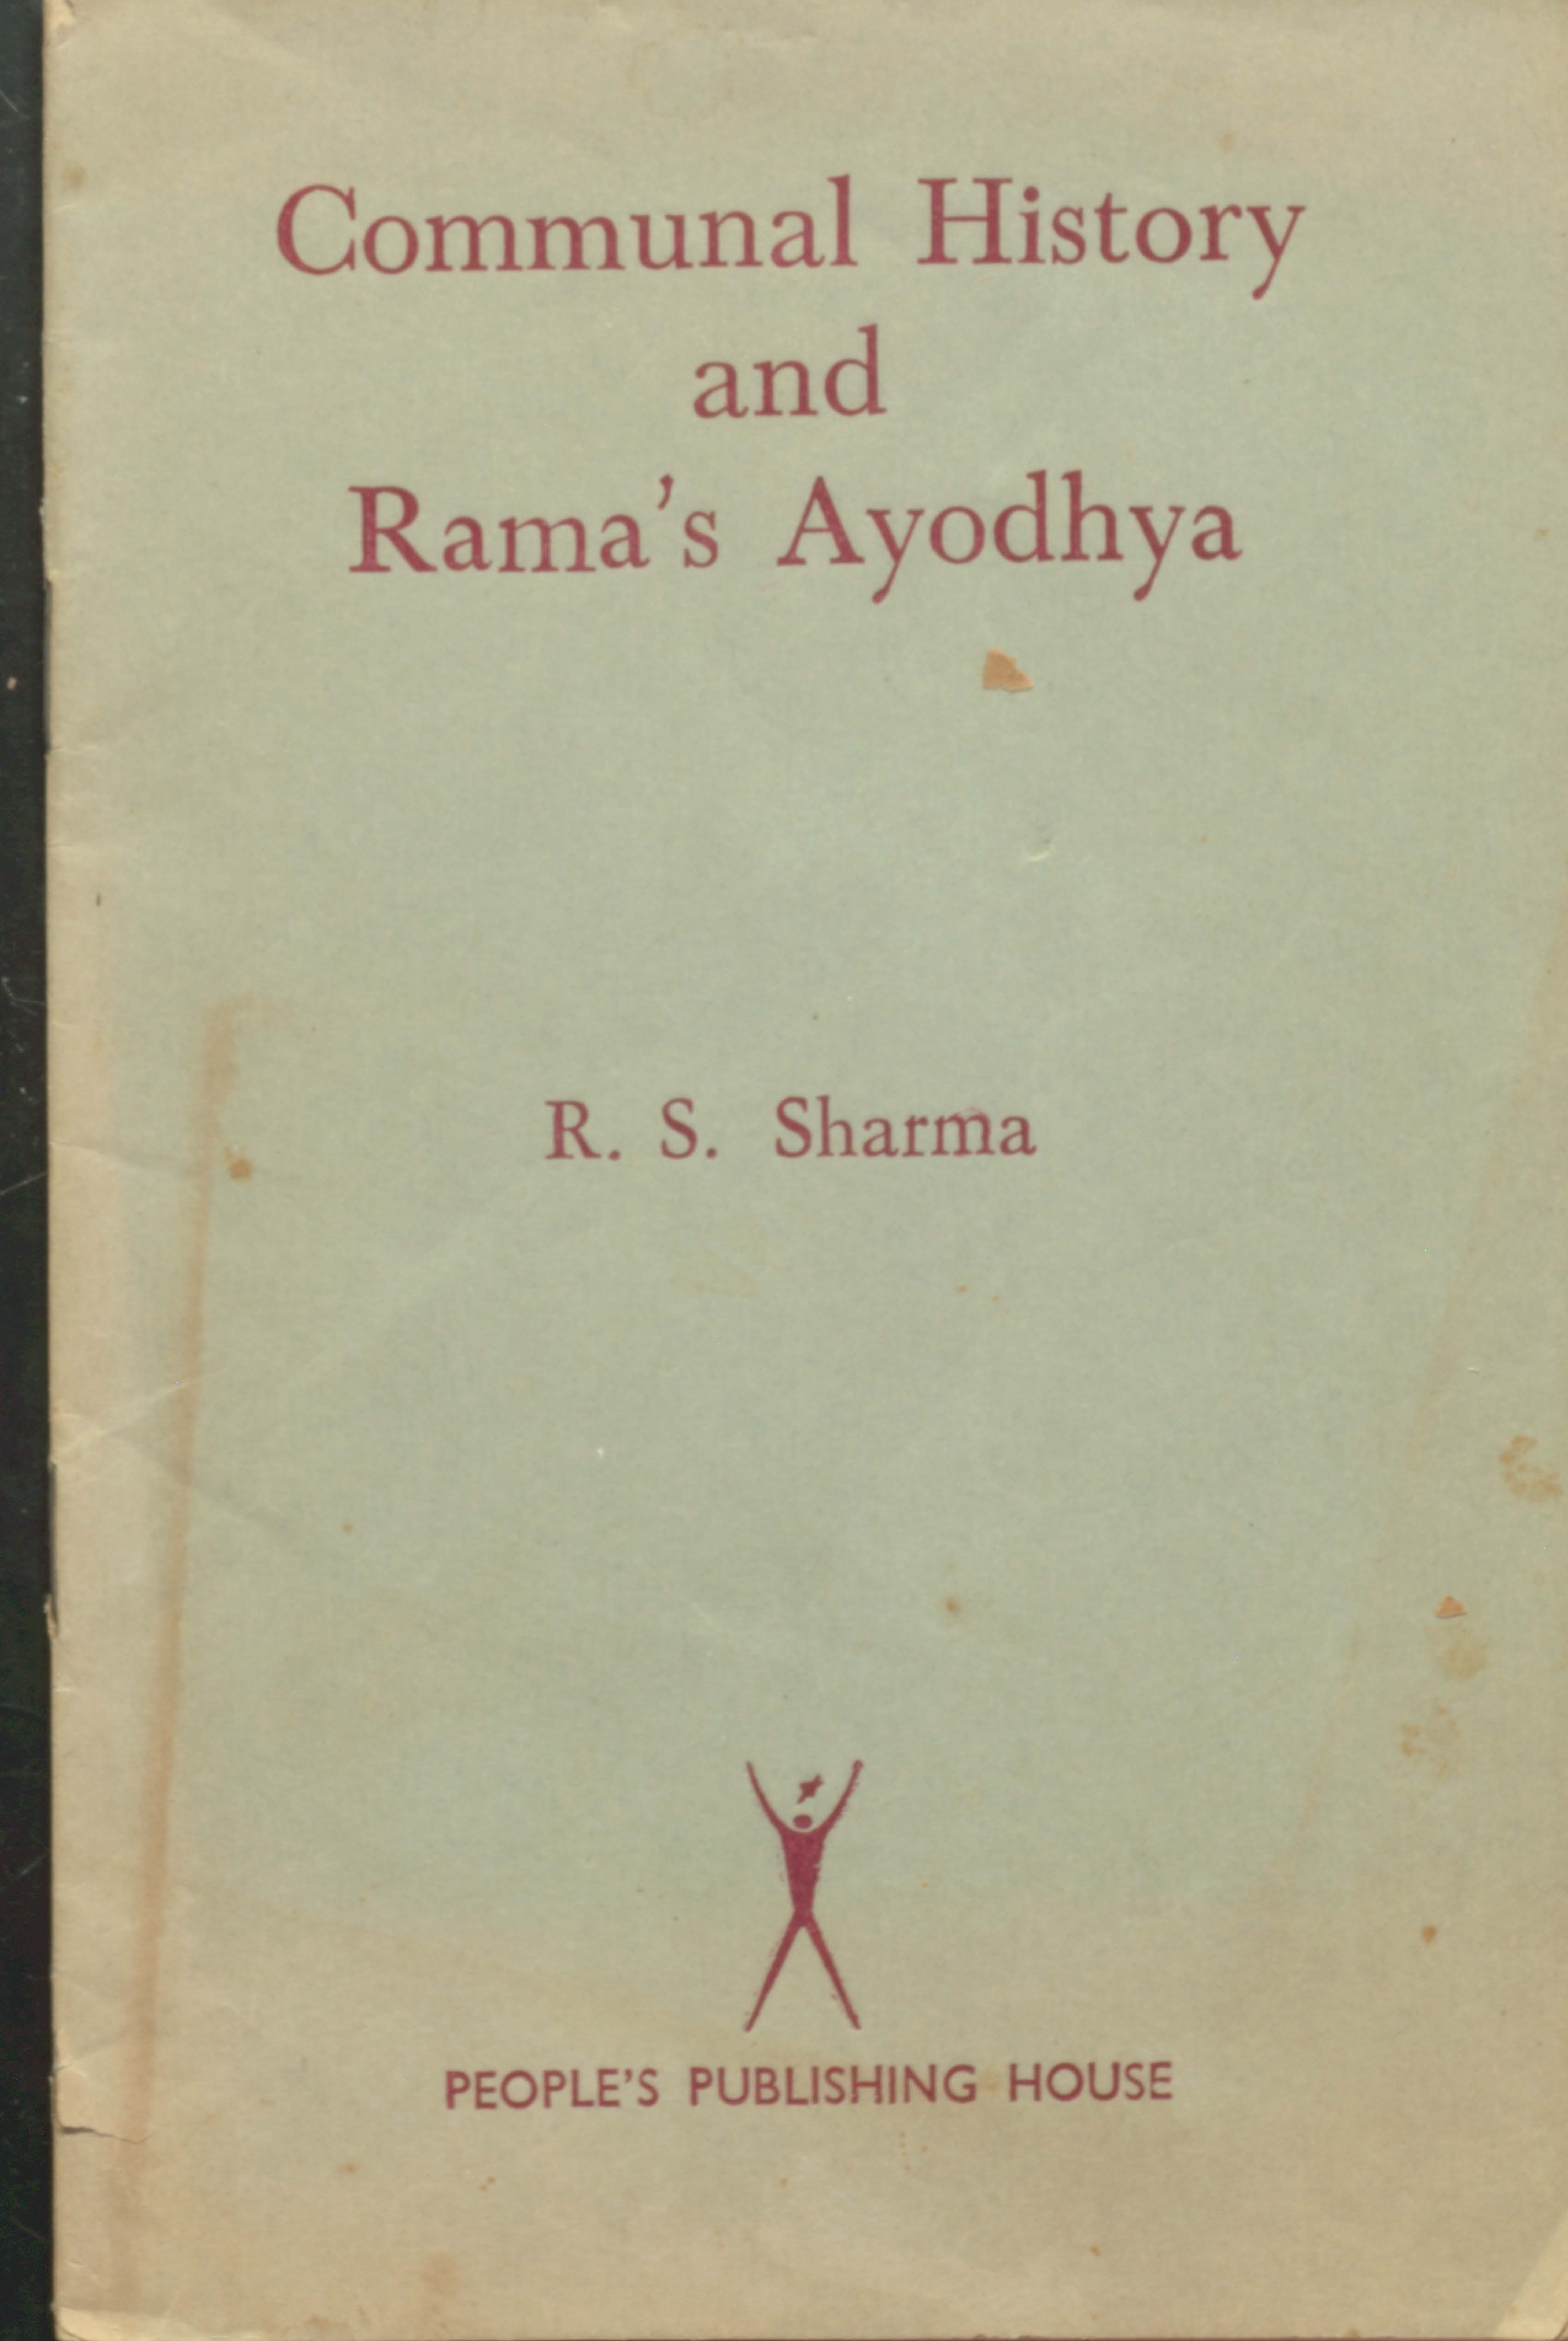 Communal History and Rama's Ayodhya